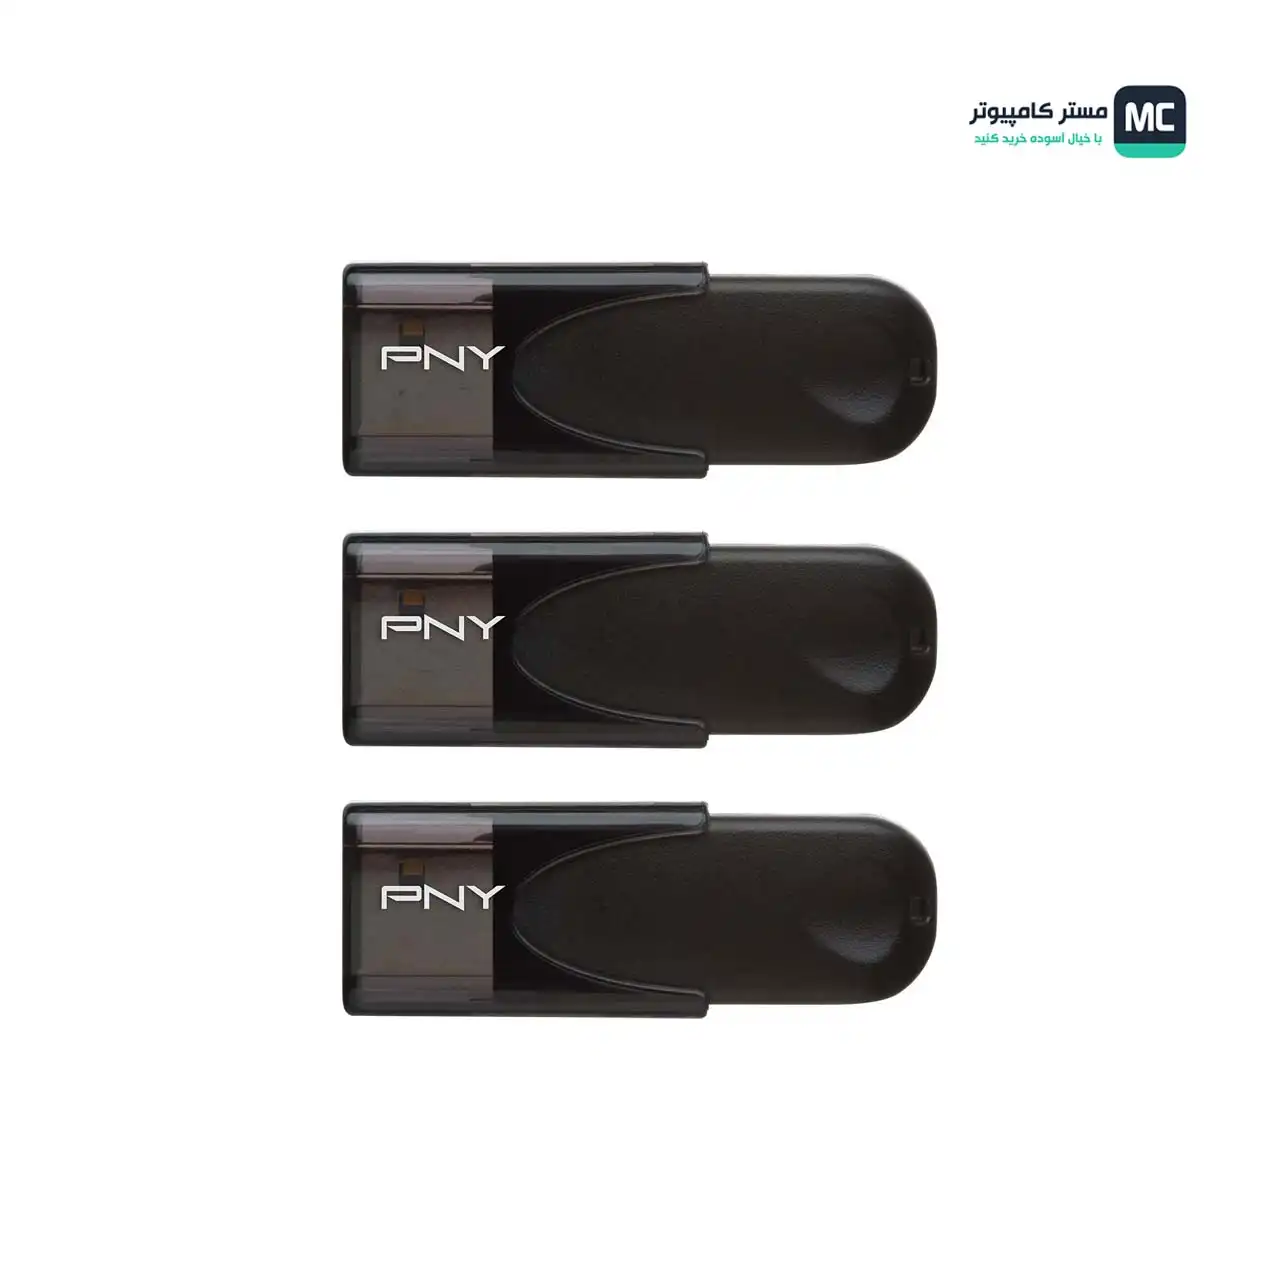 PNY Attache 4 USB 2.0 32GB 3in1Pack Main Photo